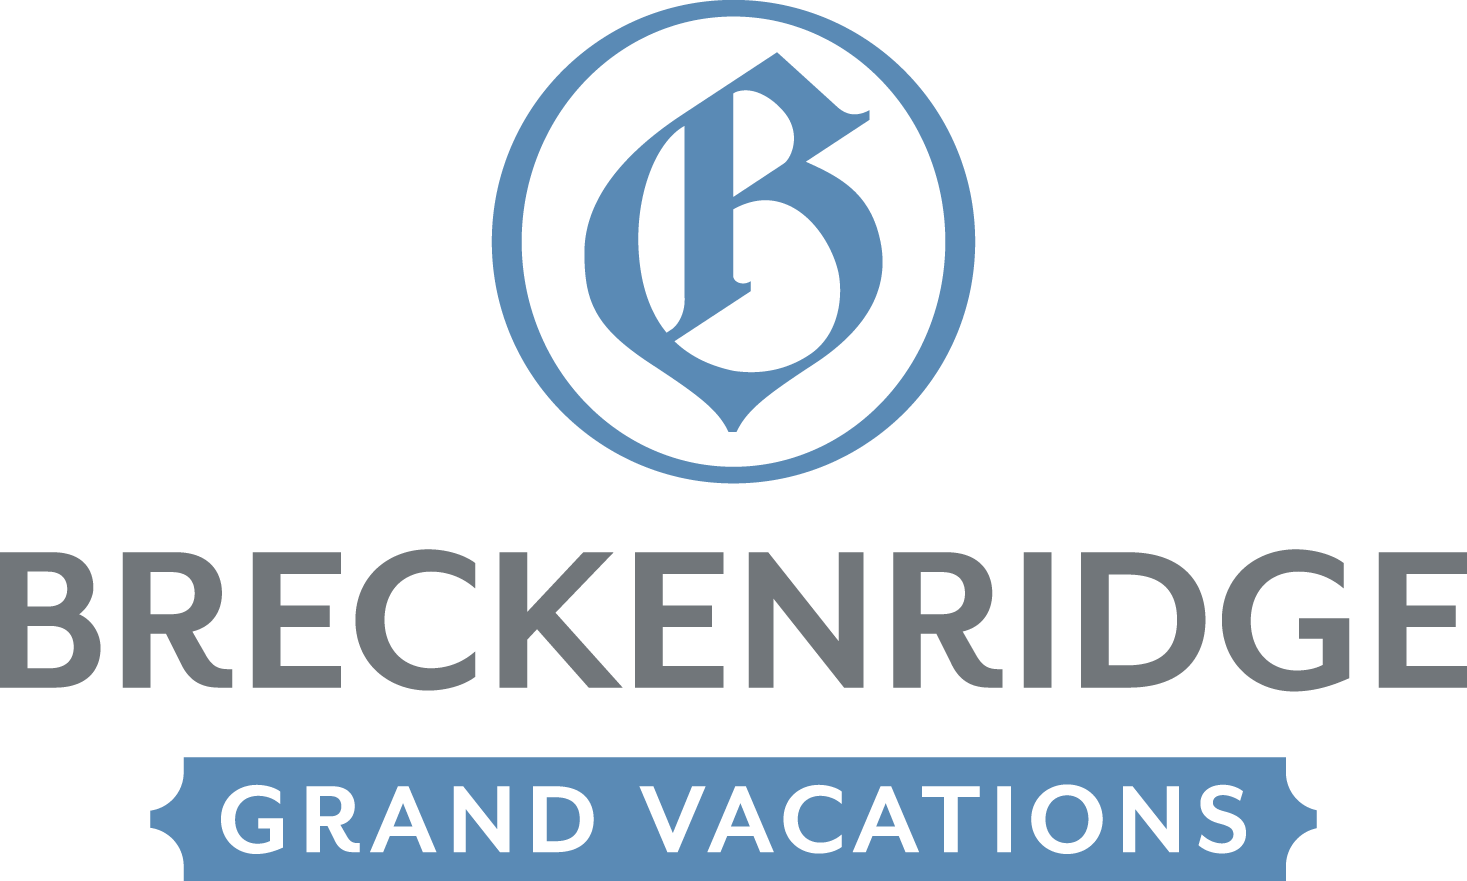 Breckenridge Grand Vacations logo